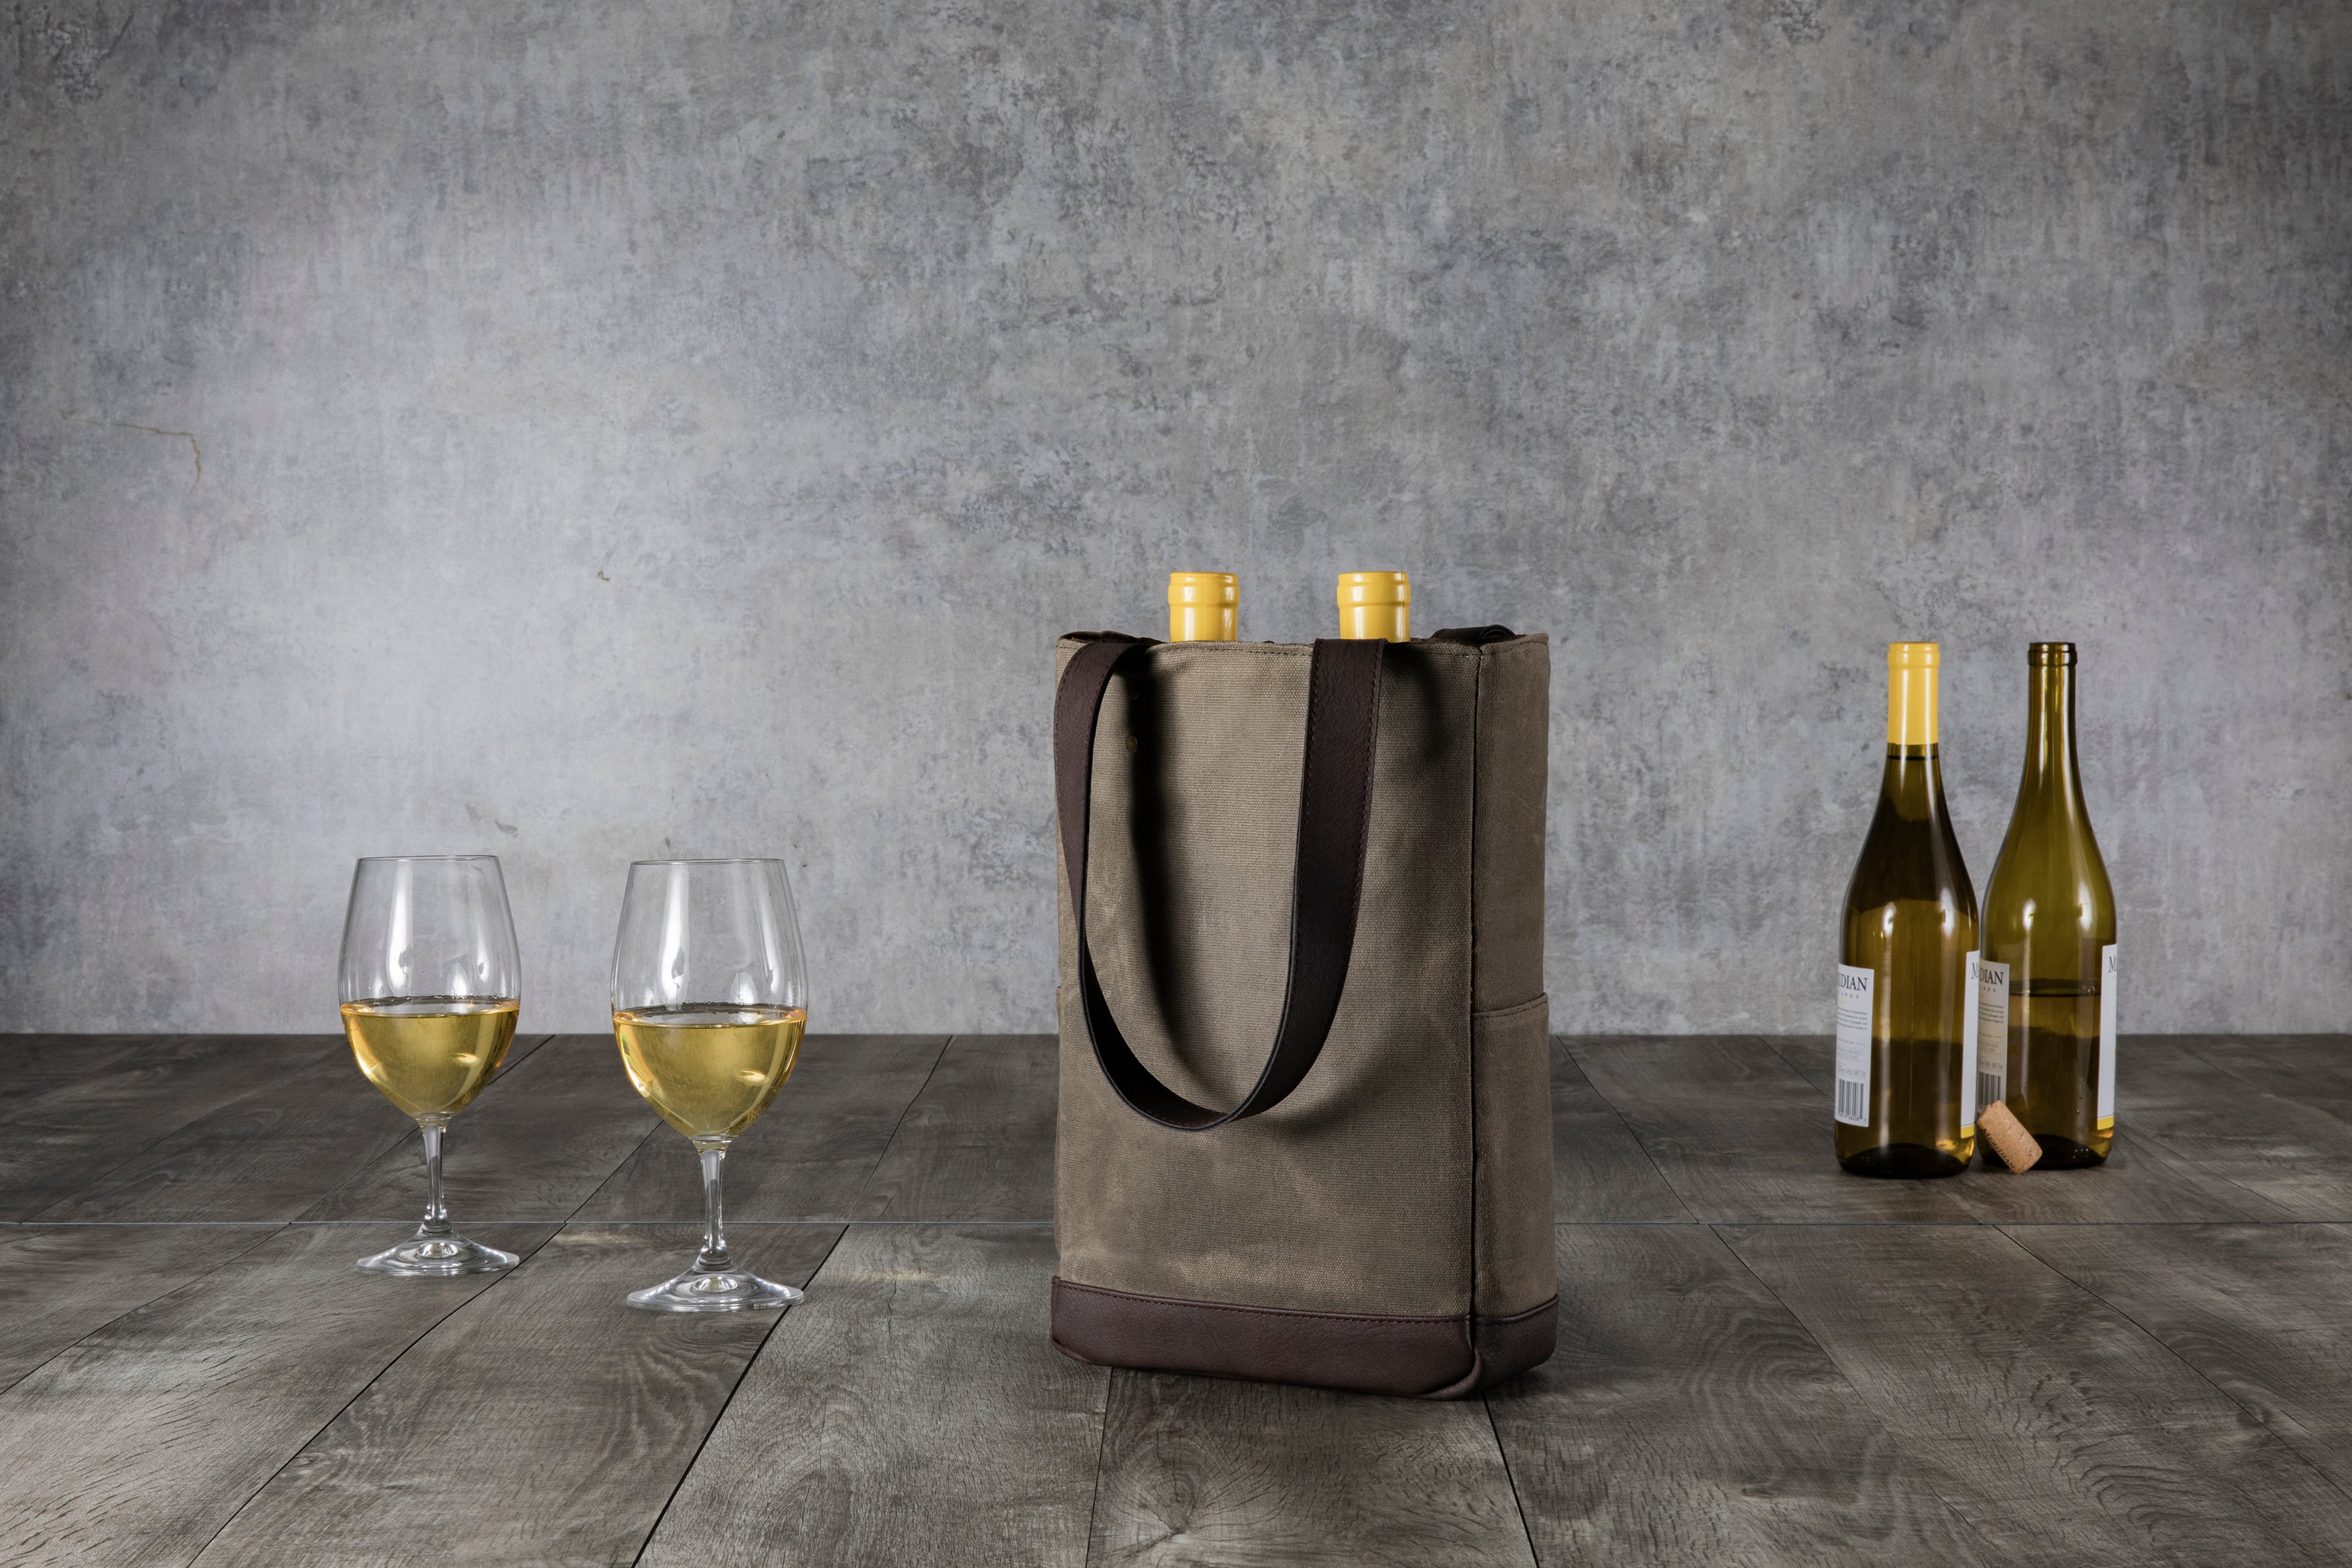 Iowa Hawkeyes - 2 Bottle Insulated Wine Cooler Bag